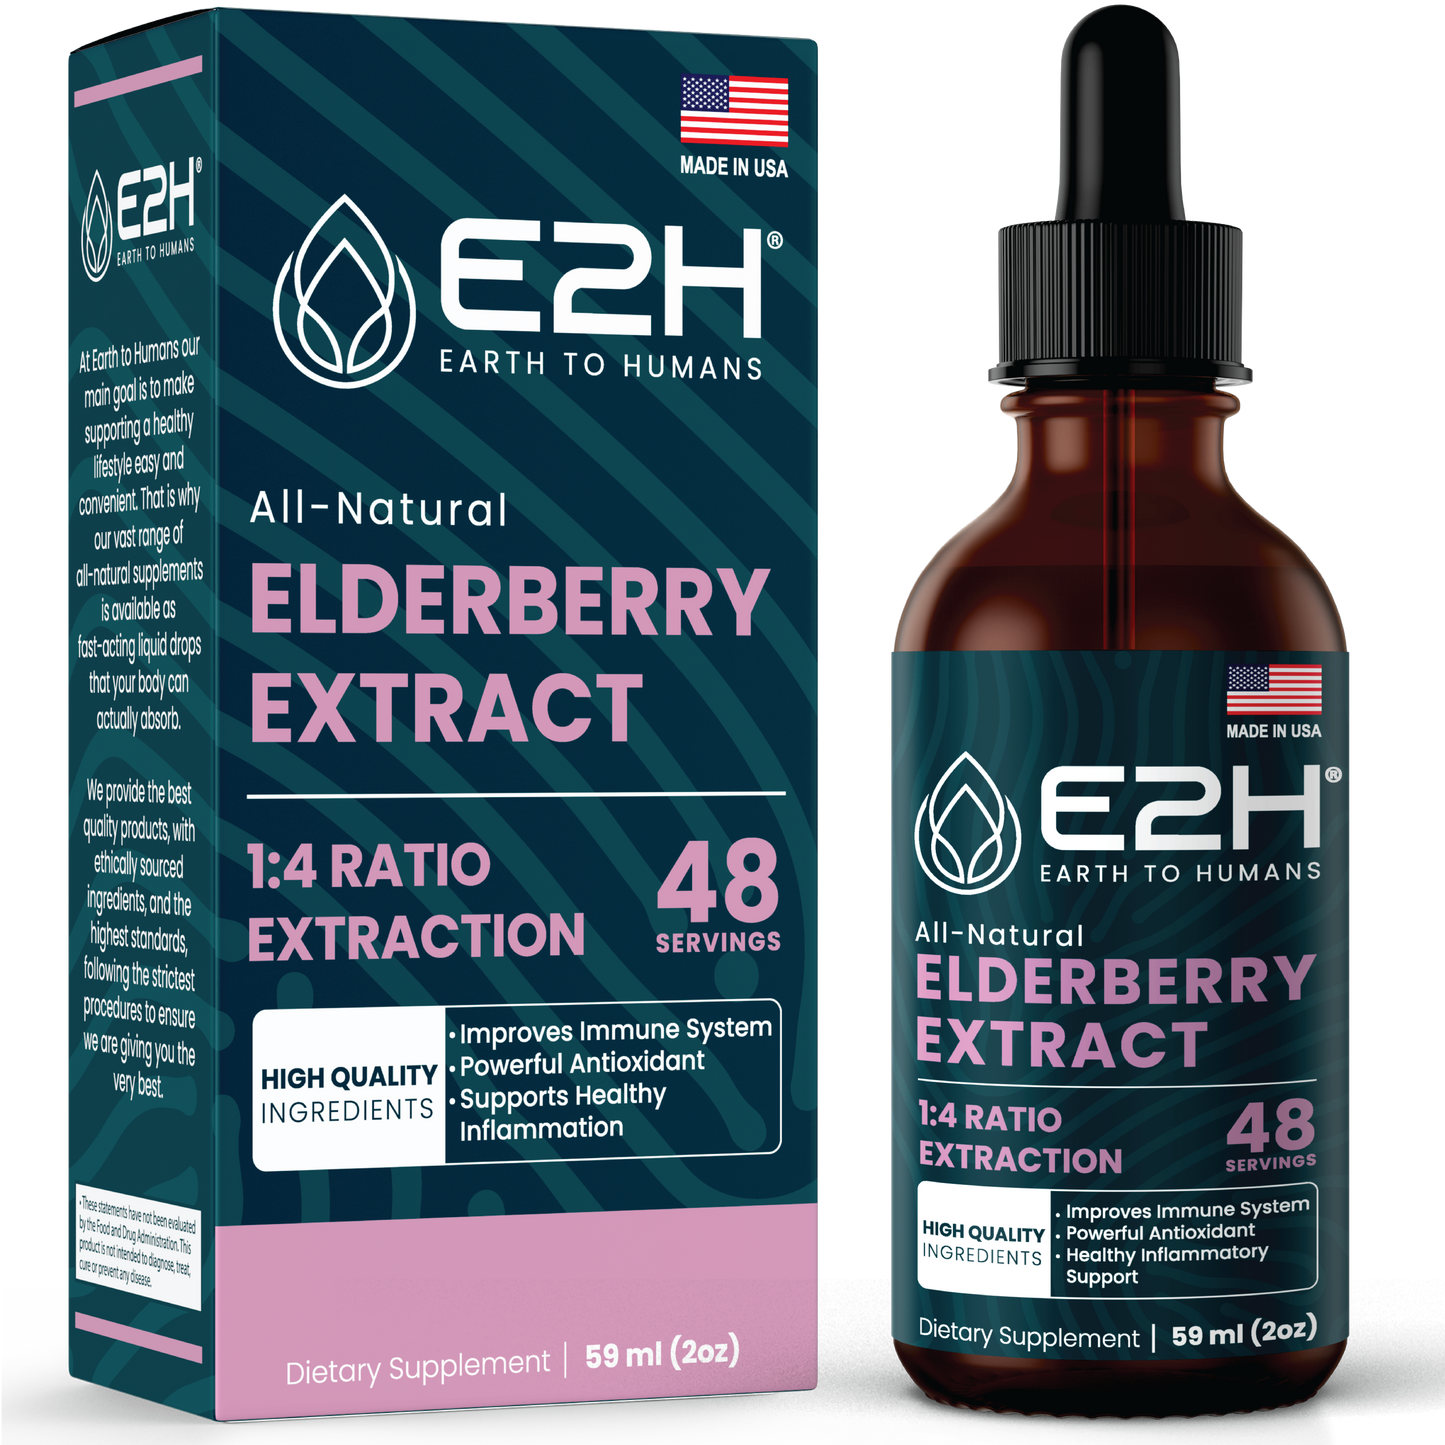 All-Natural ELDERBERRY Liquid Extract - E2H